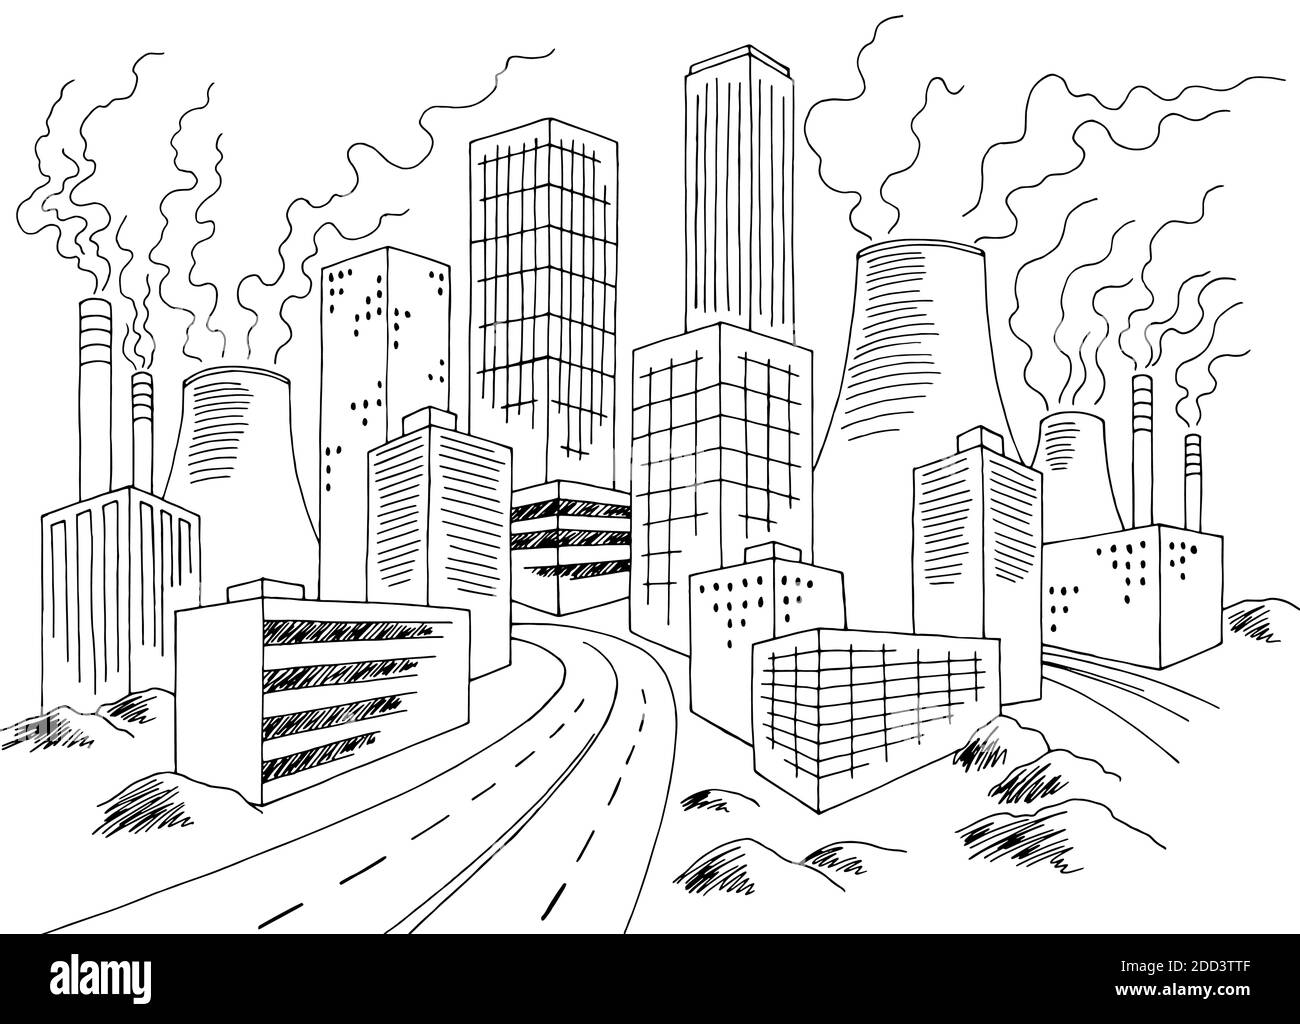 Eco Problem Stadt Grafik schlechte Ökologie schwarz weiß Landschaft Skizze Illustrationsvektor Stock Vektor